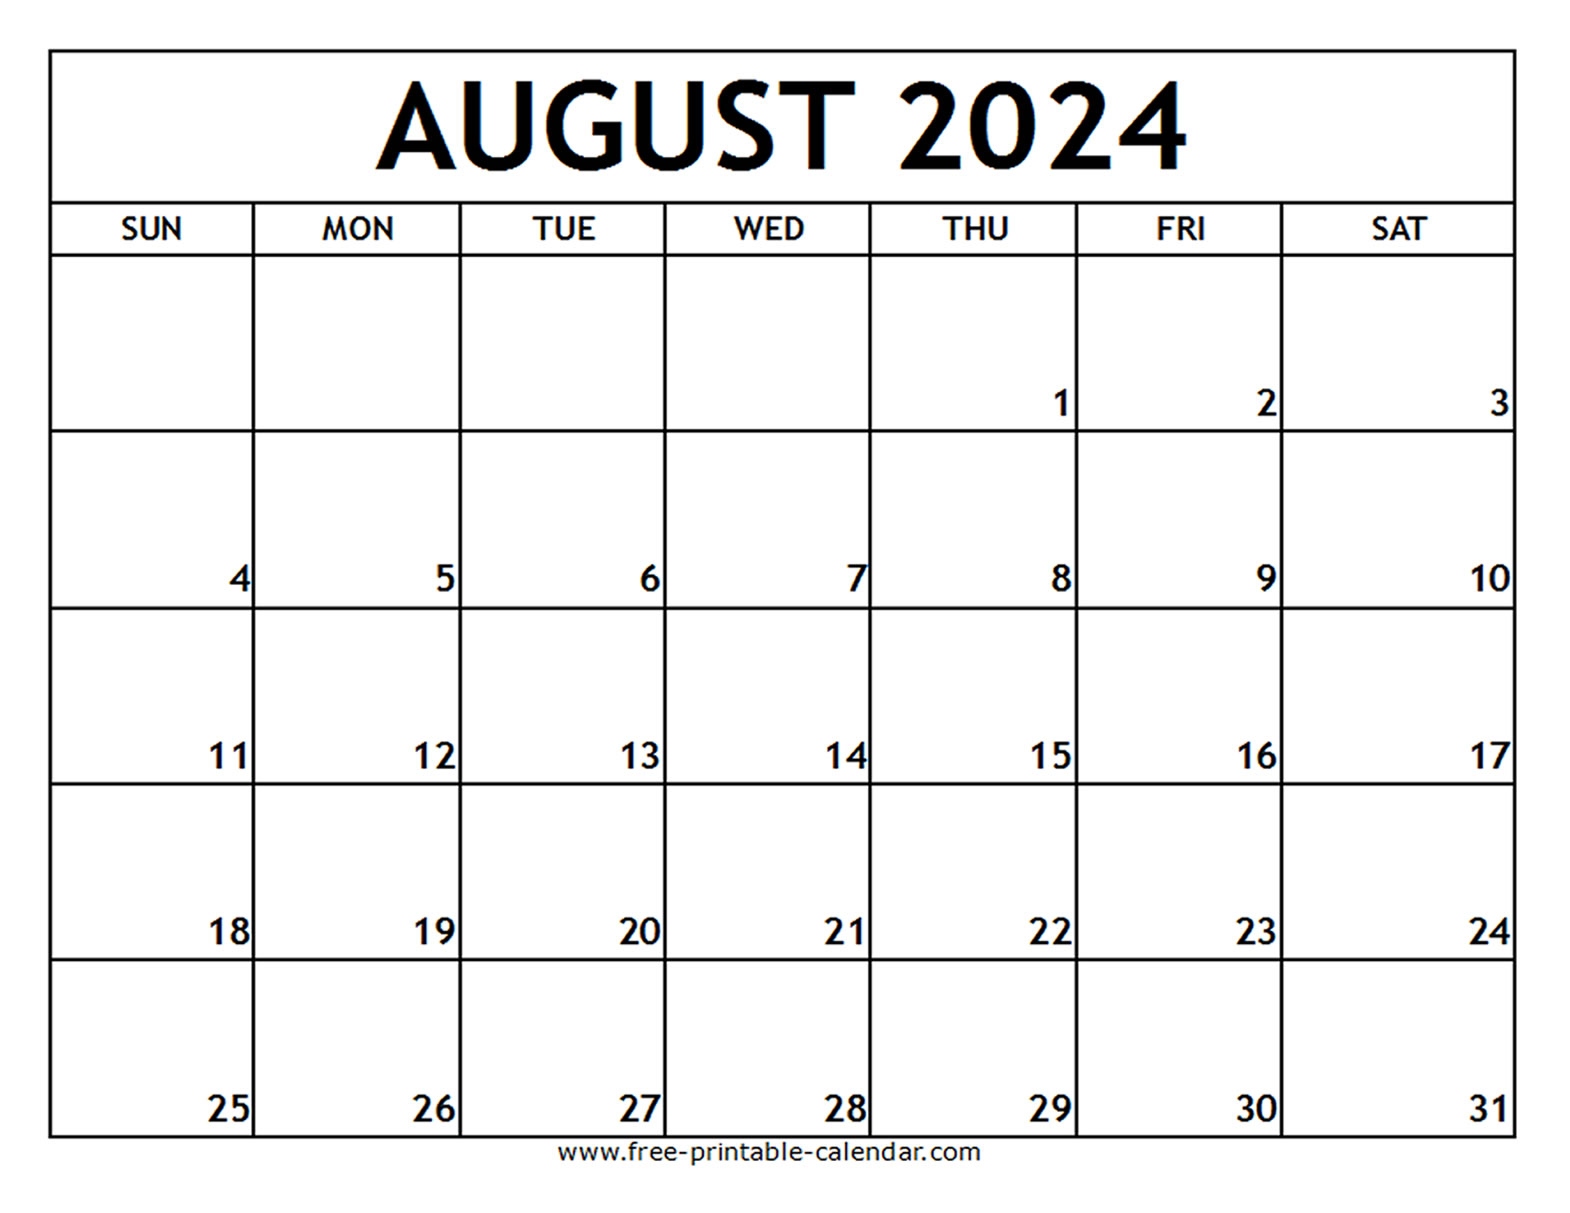 August 2024 Printable Calendar - Free-Printable-Calendar inside Free Printable August 2024 Monthly Calendar With Holidays